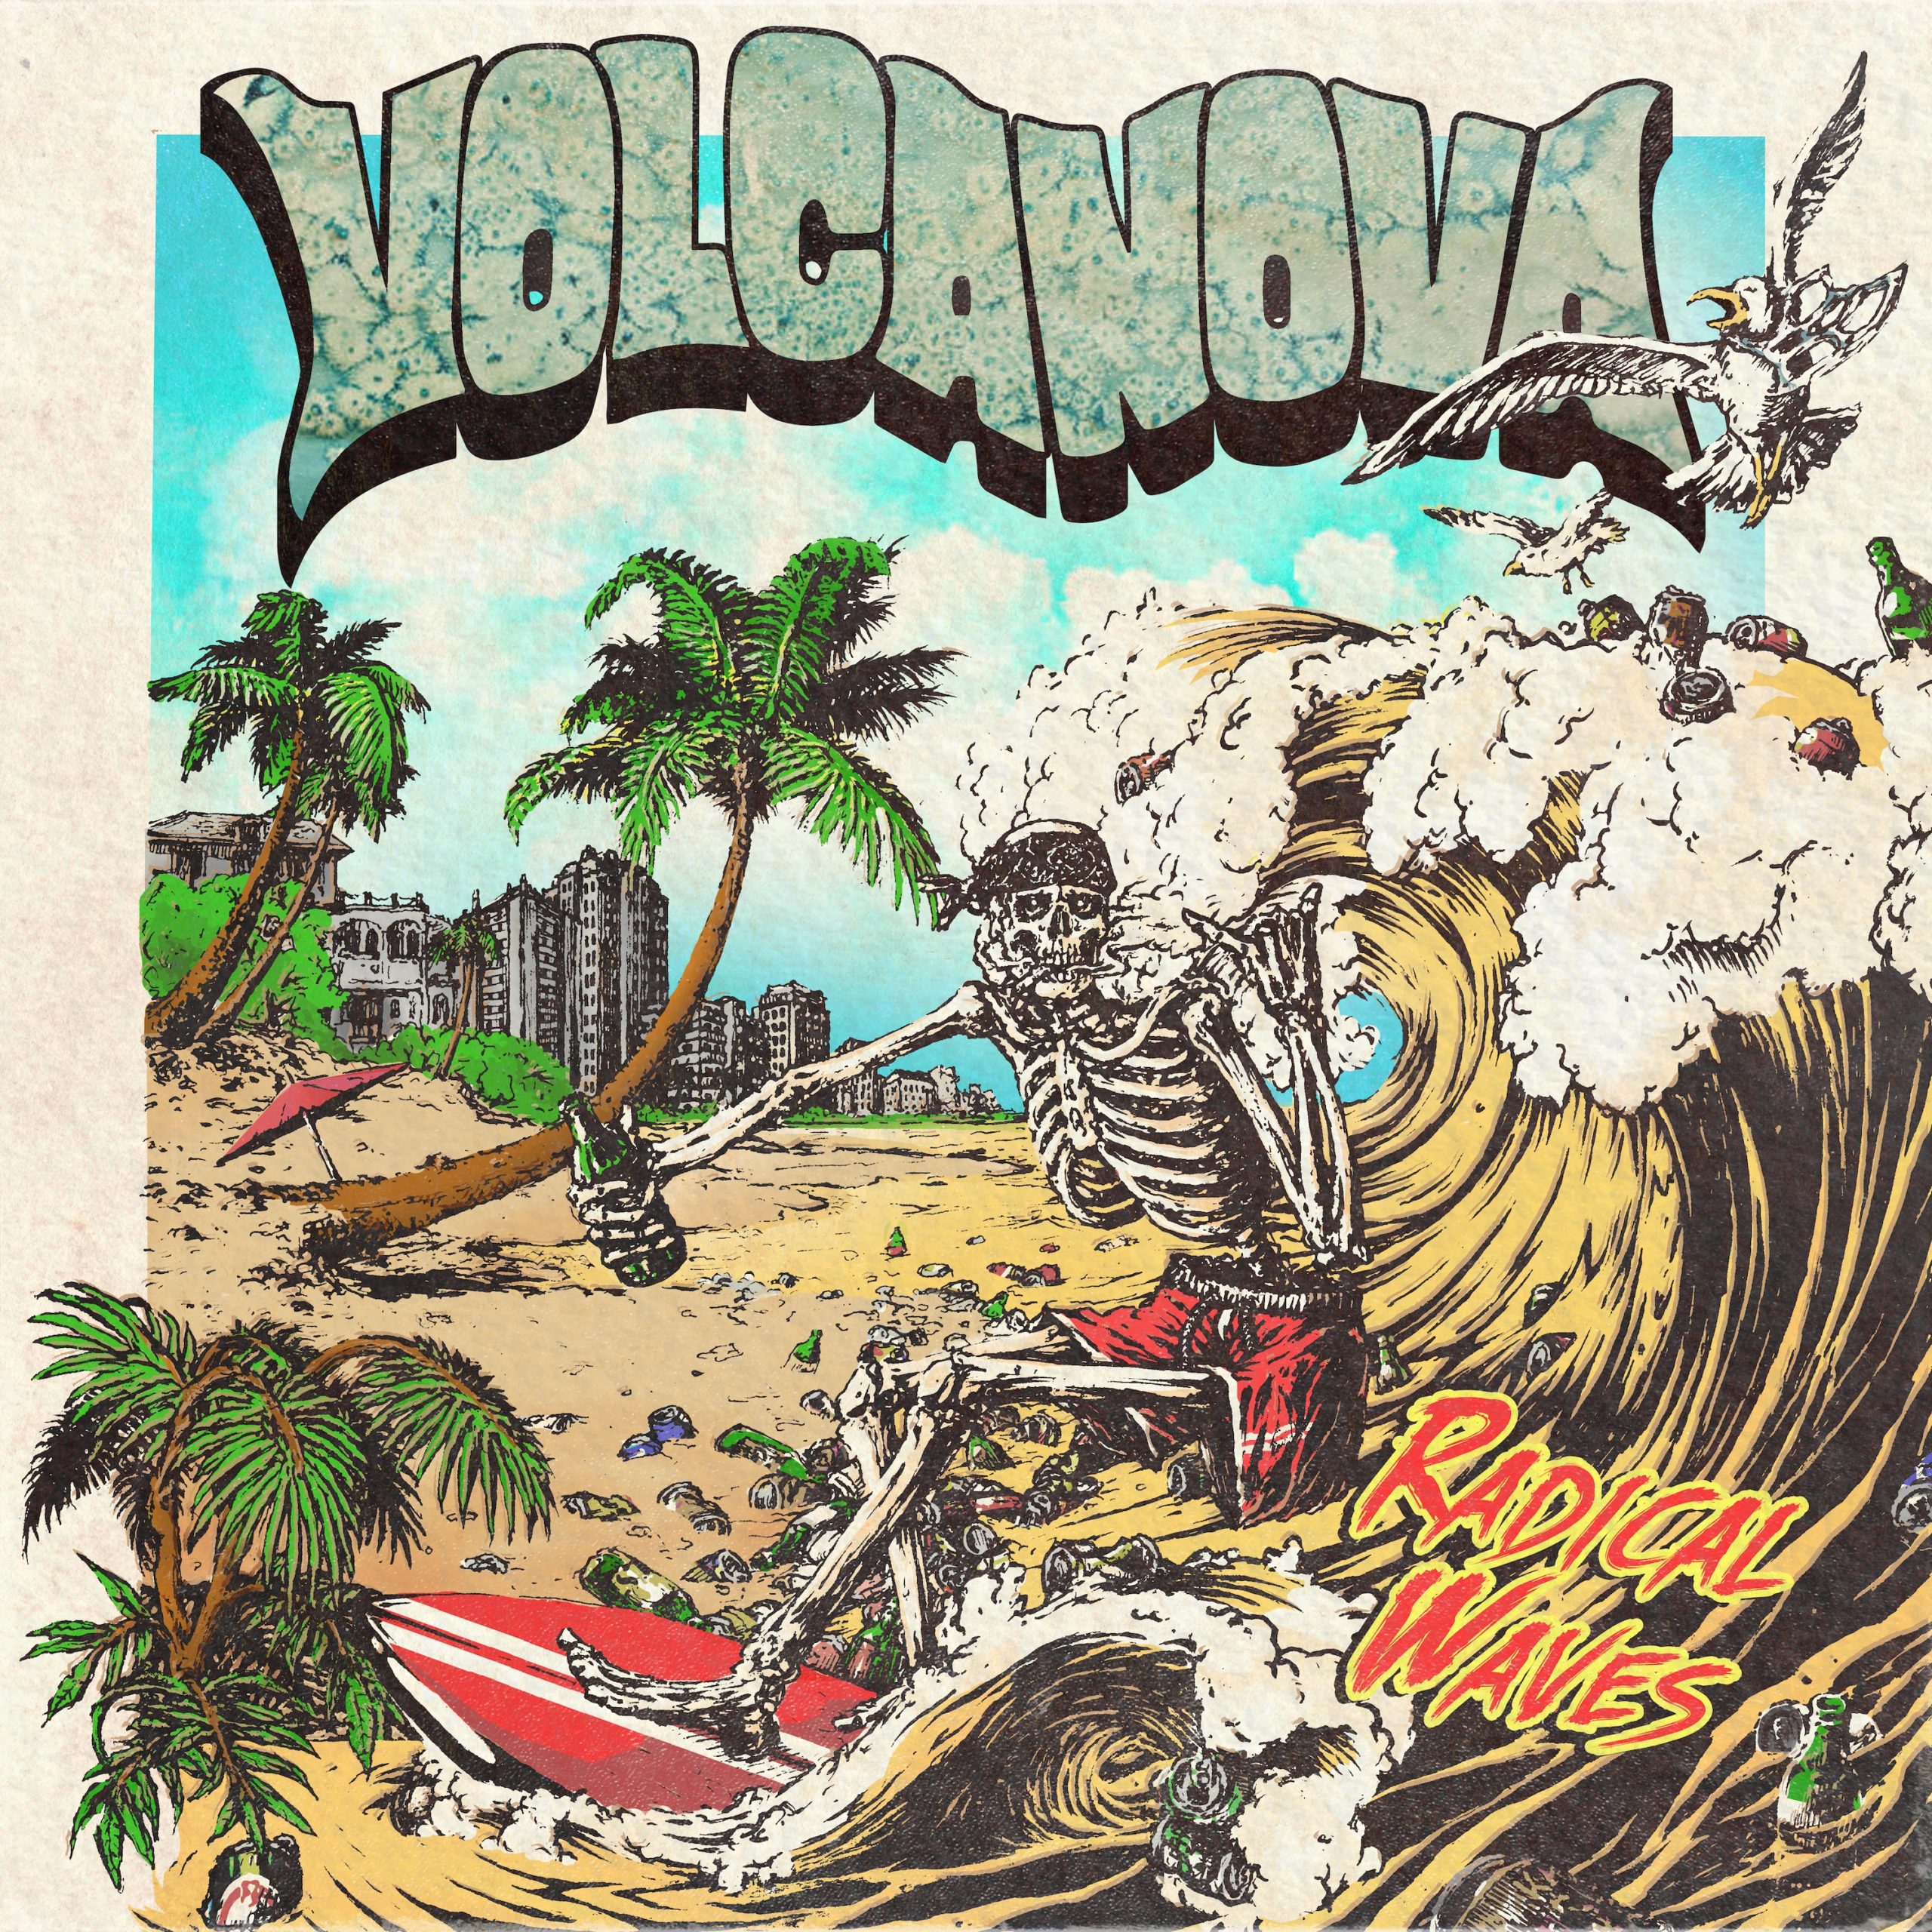 Volcanova – Radical Waves